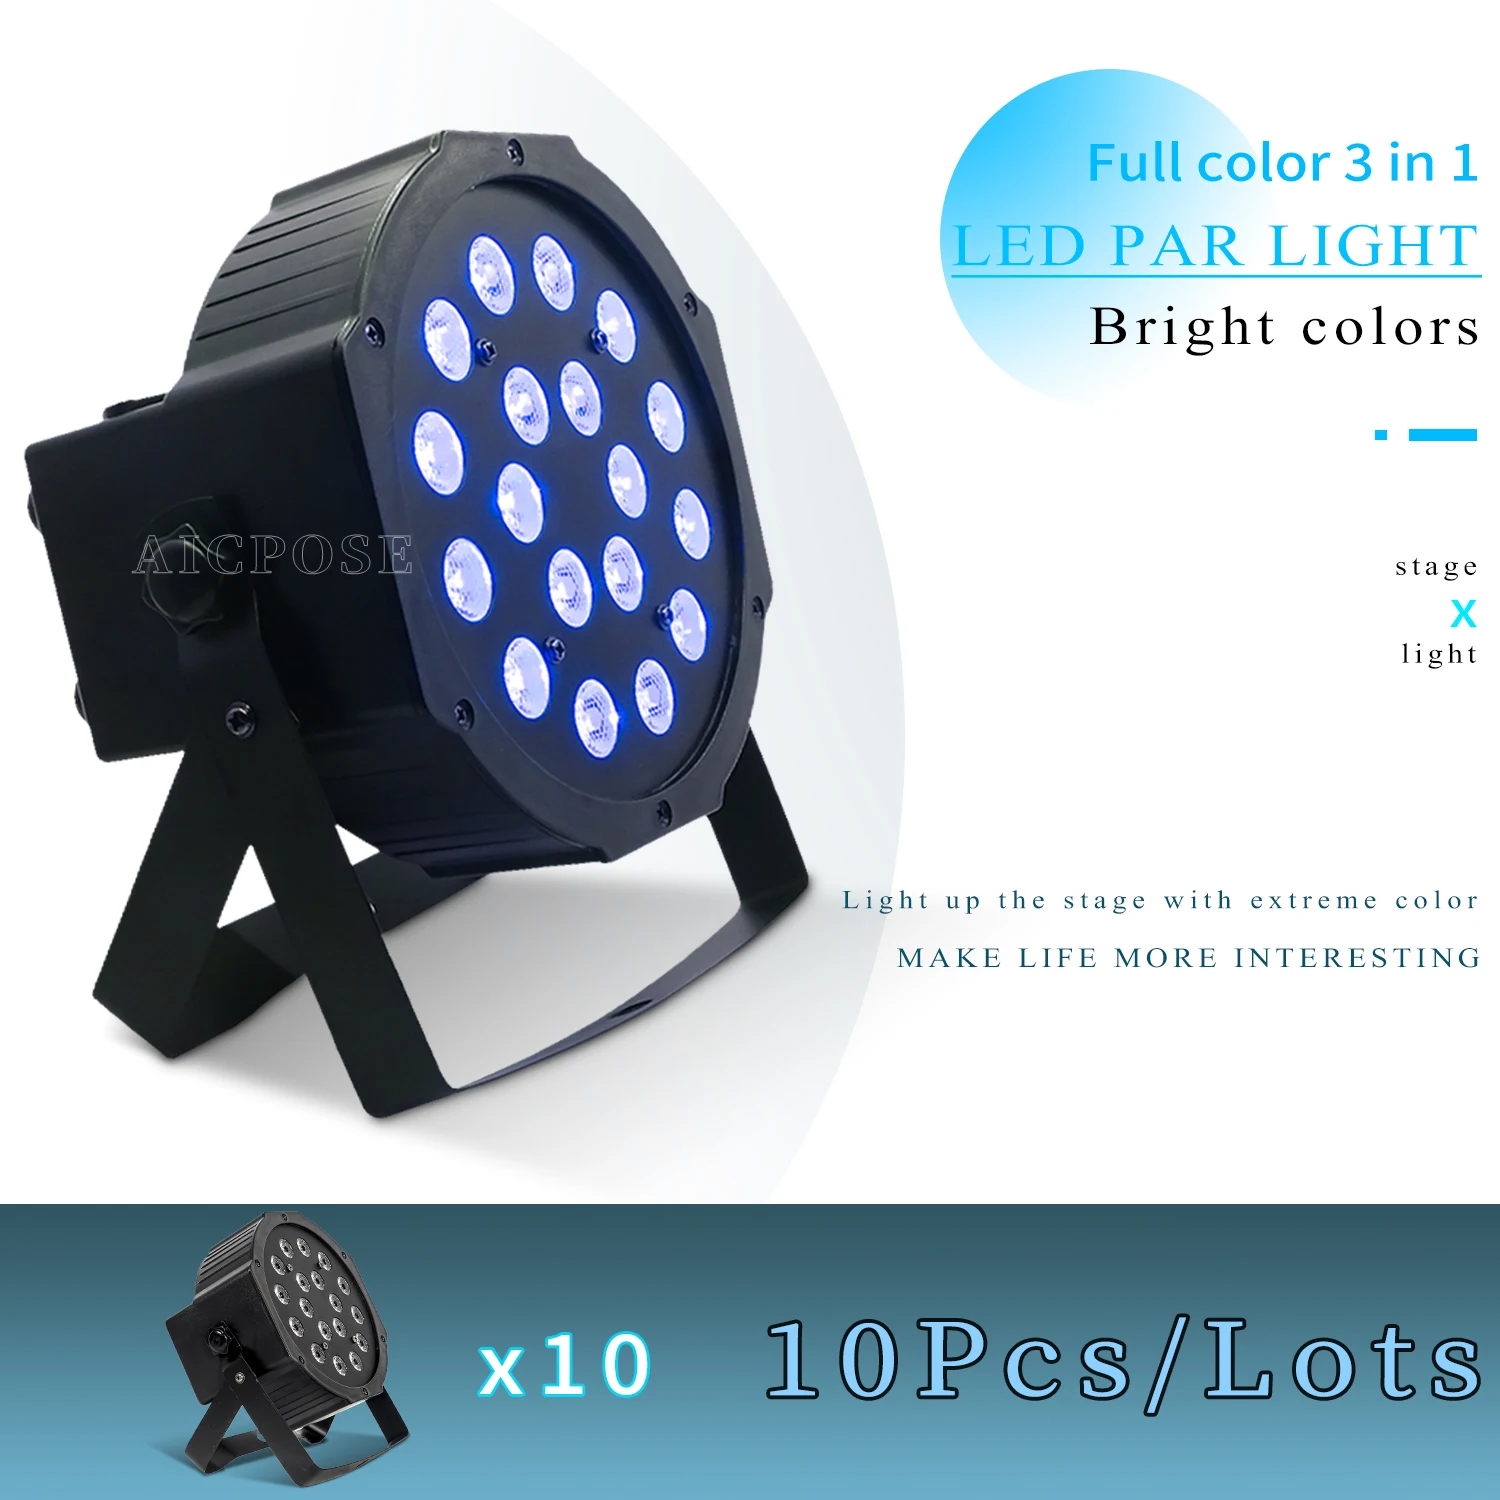 

10Pcs/Lot 18Pcs 3w LED Lamp Beads 18x3w LED Par Lights RGB 3in1 Flat Par Led DMX512 Disco Lights Professional Stage DJ Equipment